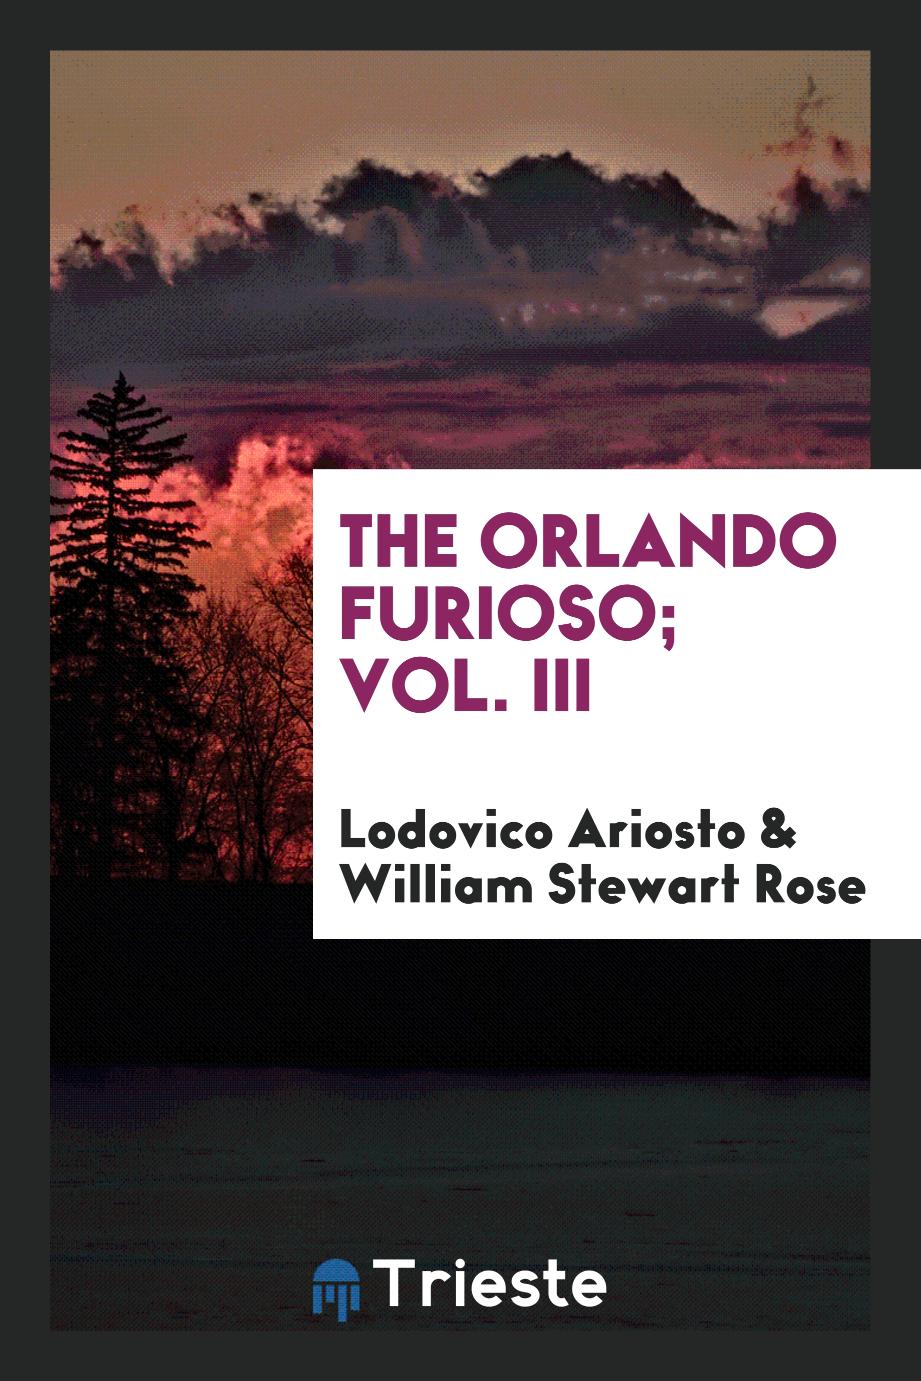 The Orlando furioso; Vol. III